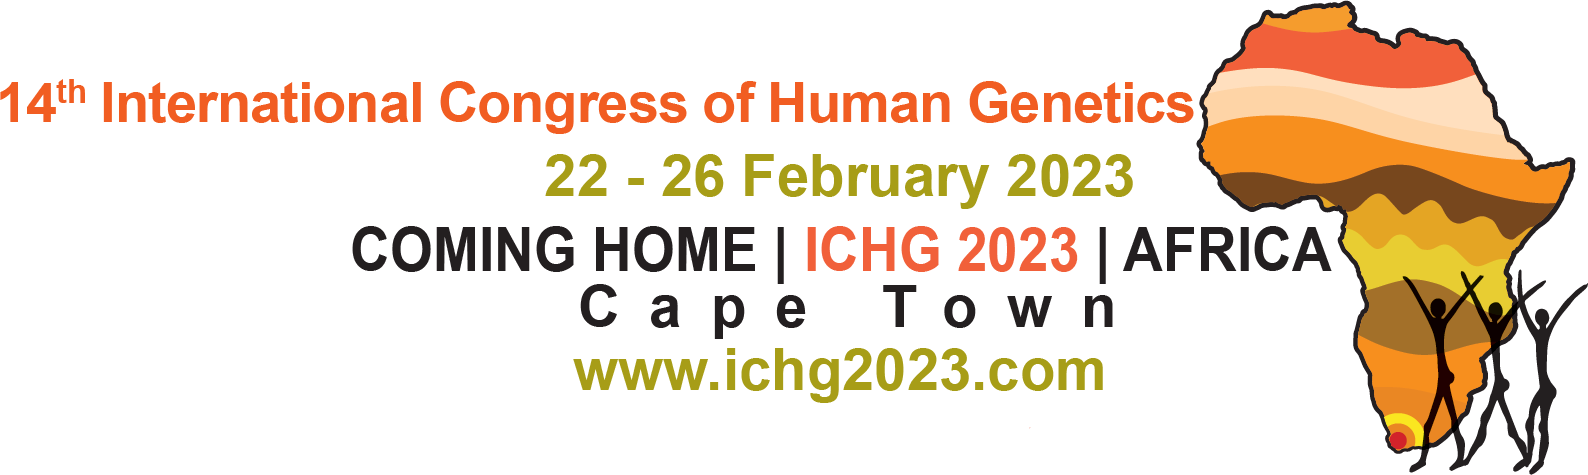 International Congress of Human Genetics 2023